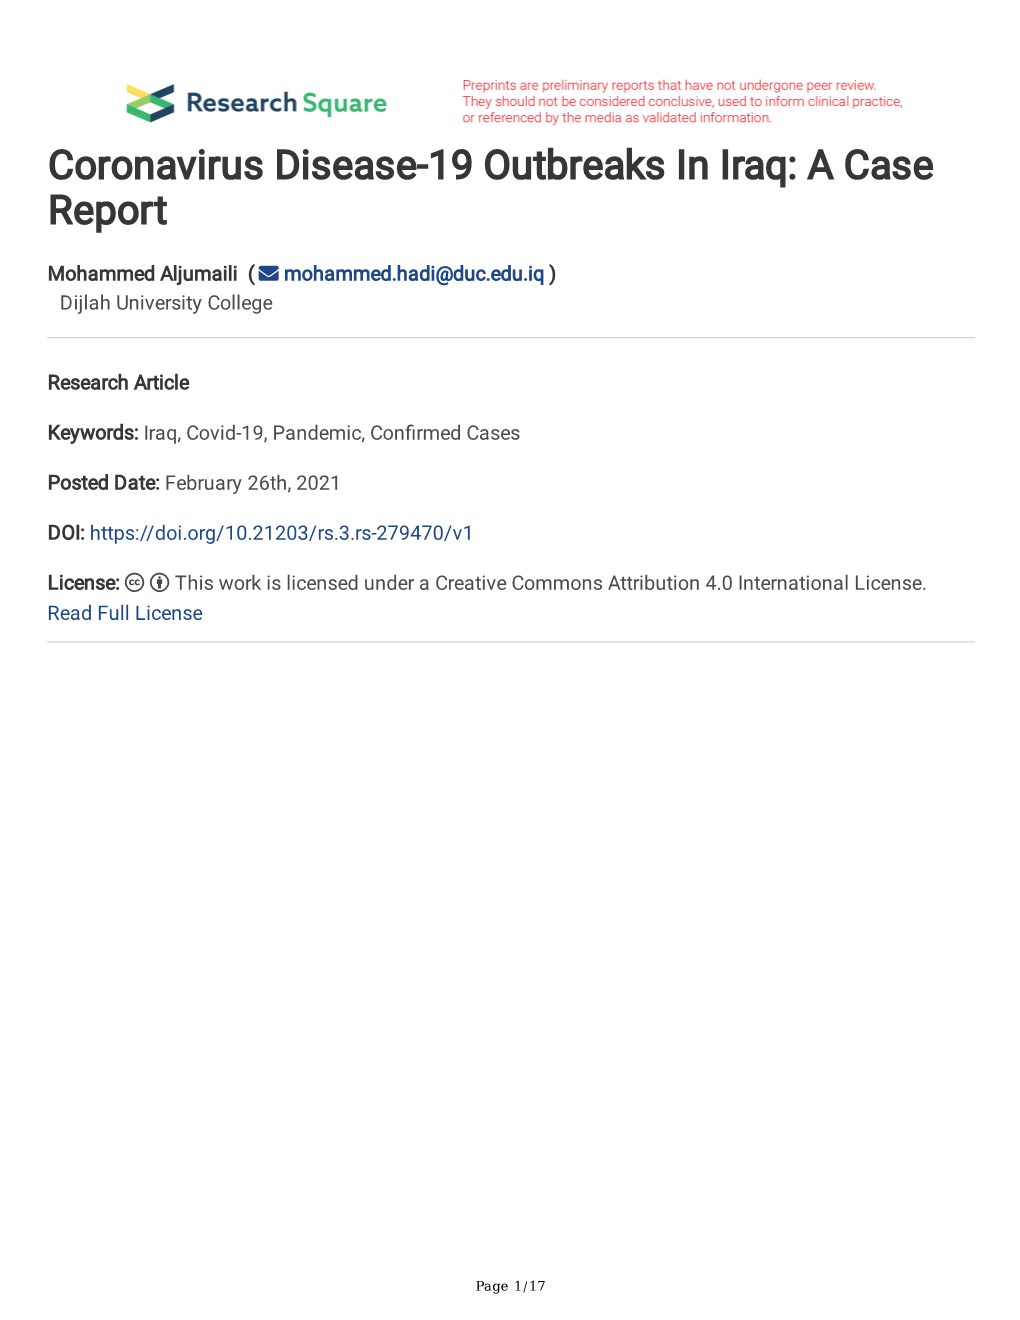 Coronavirus Disease-19 Outbreaks in Iraq: a Case Report